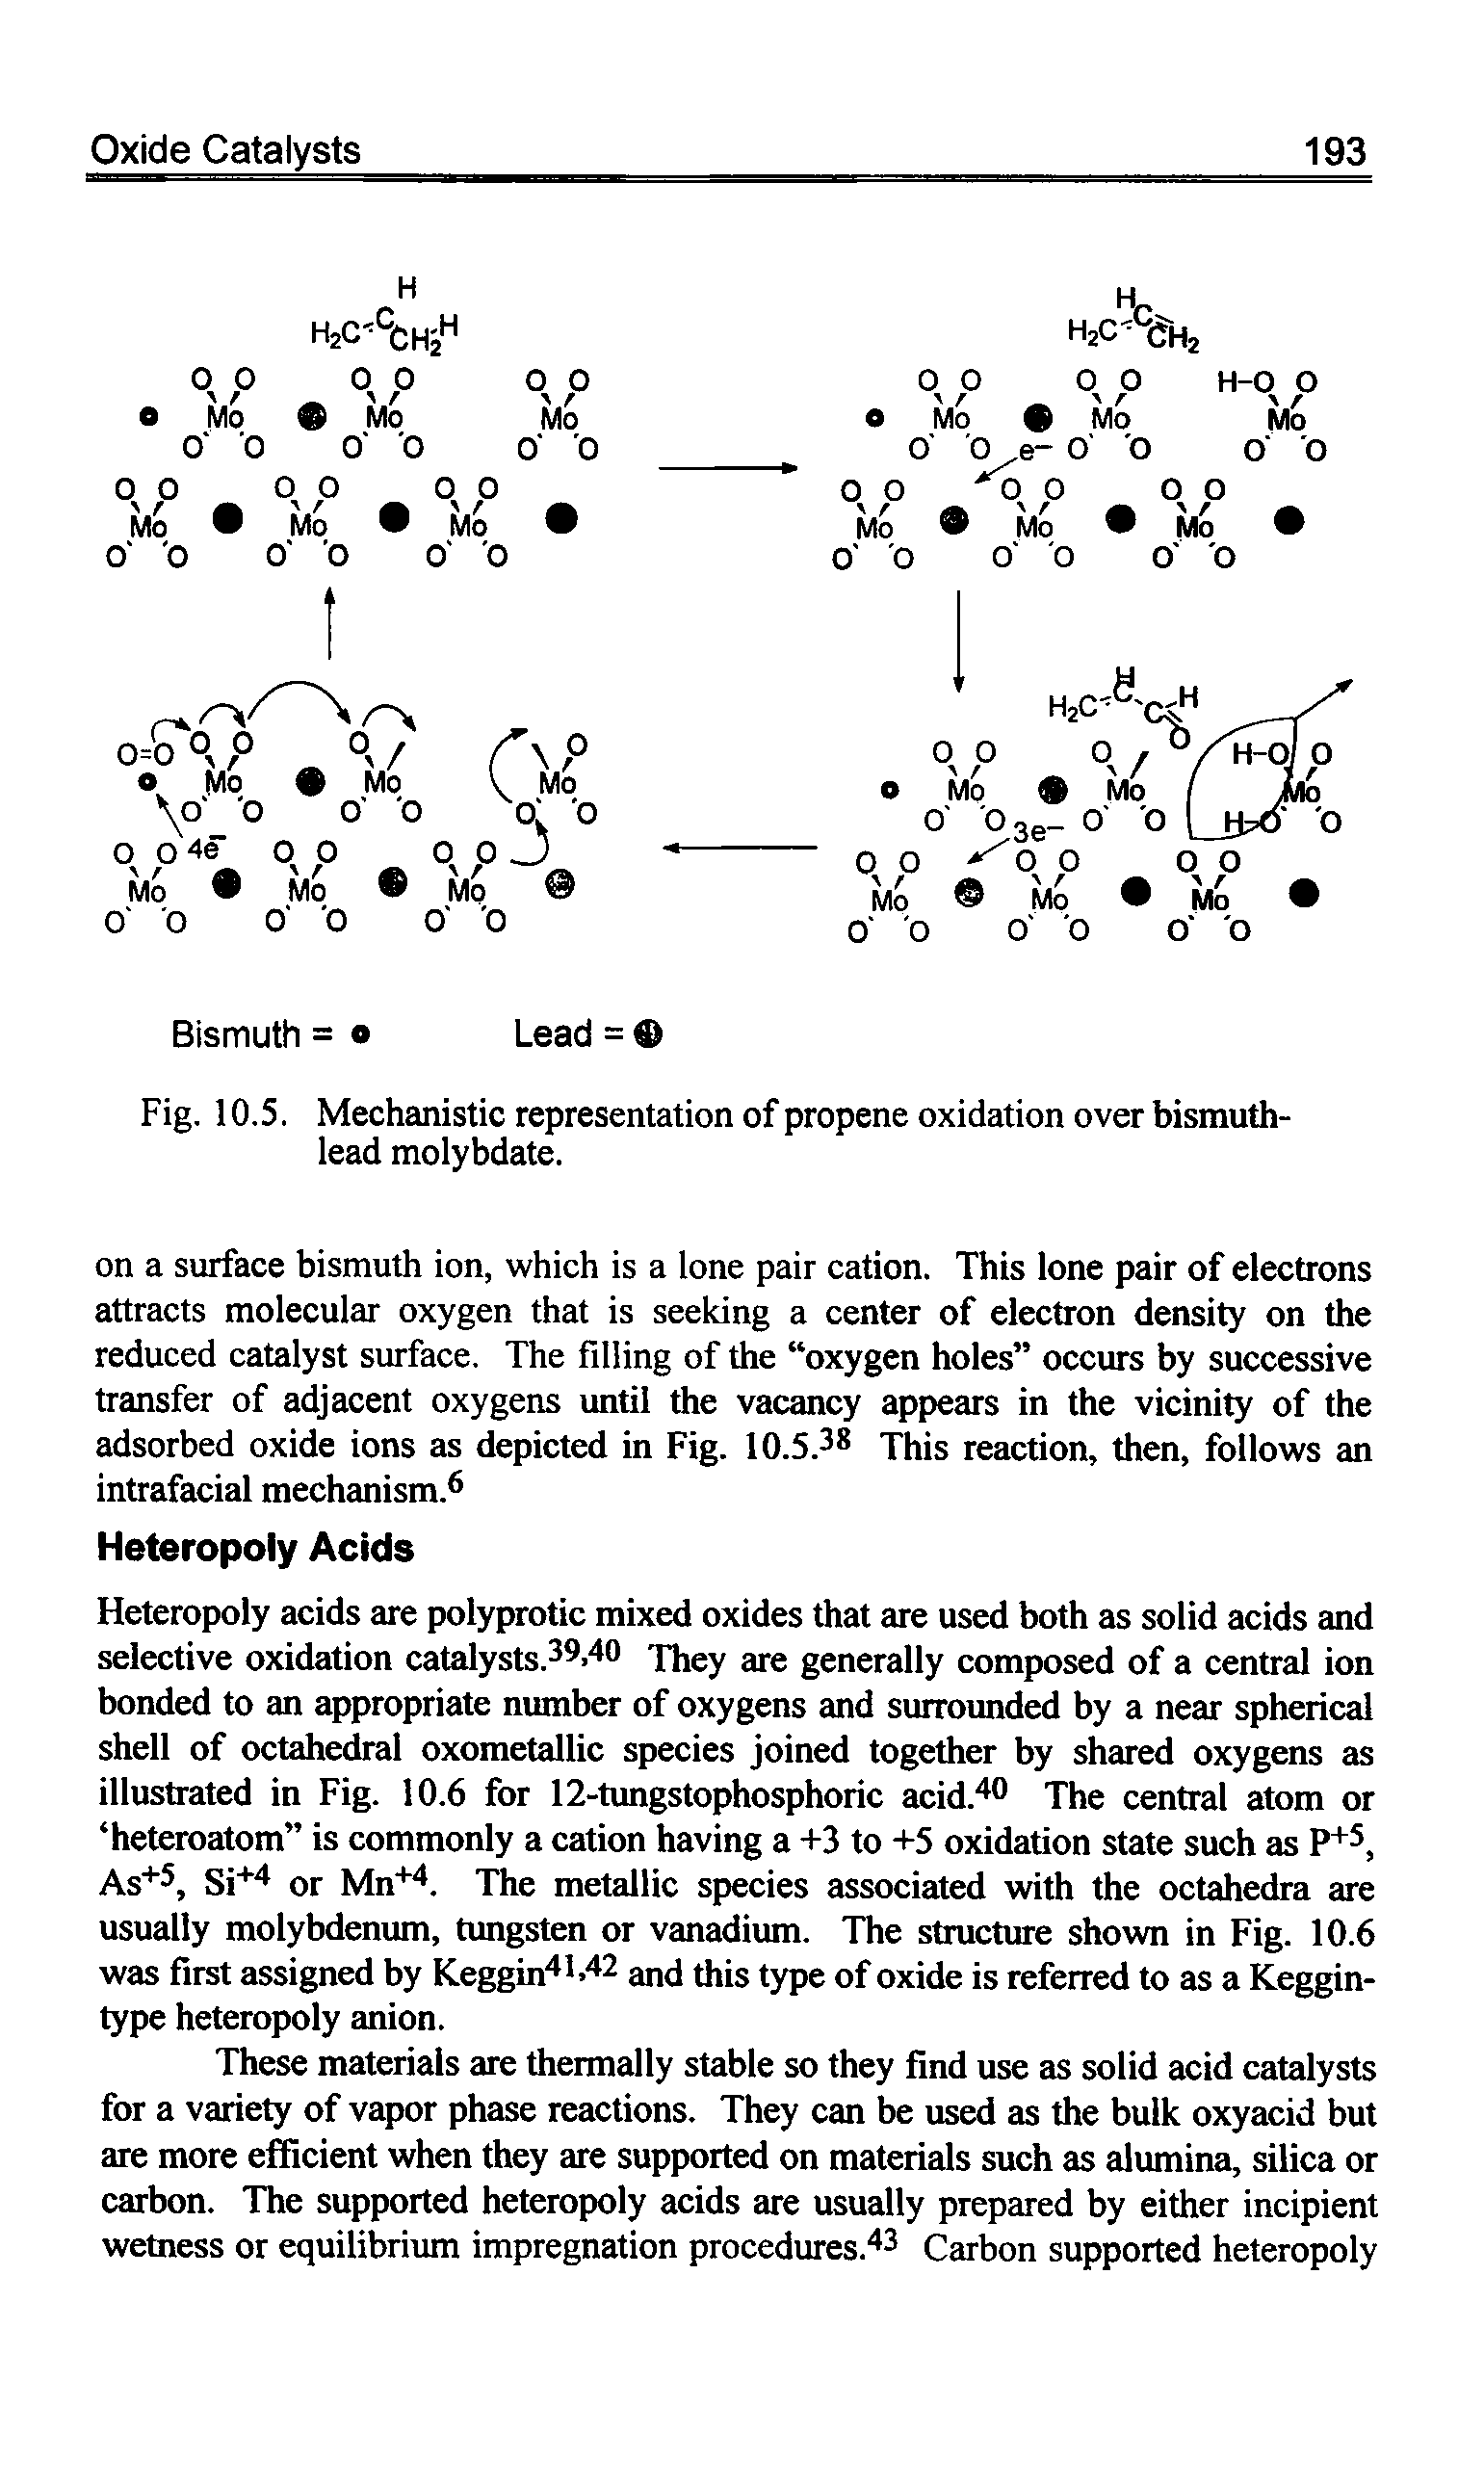 Fig. 10.5. Mechanistic representation of propene oxidation over bismuth-lead molybdate.